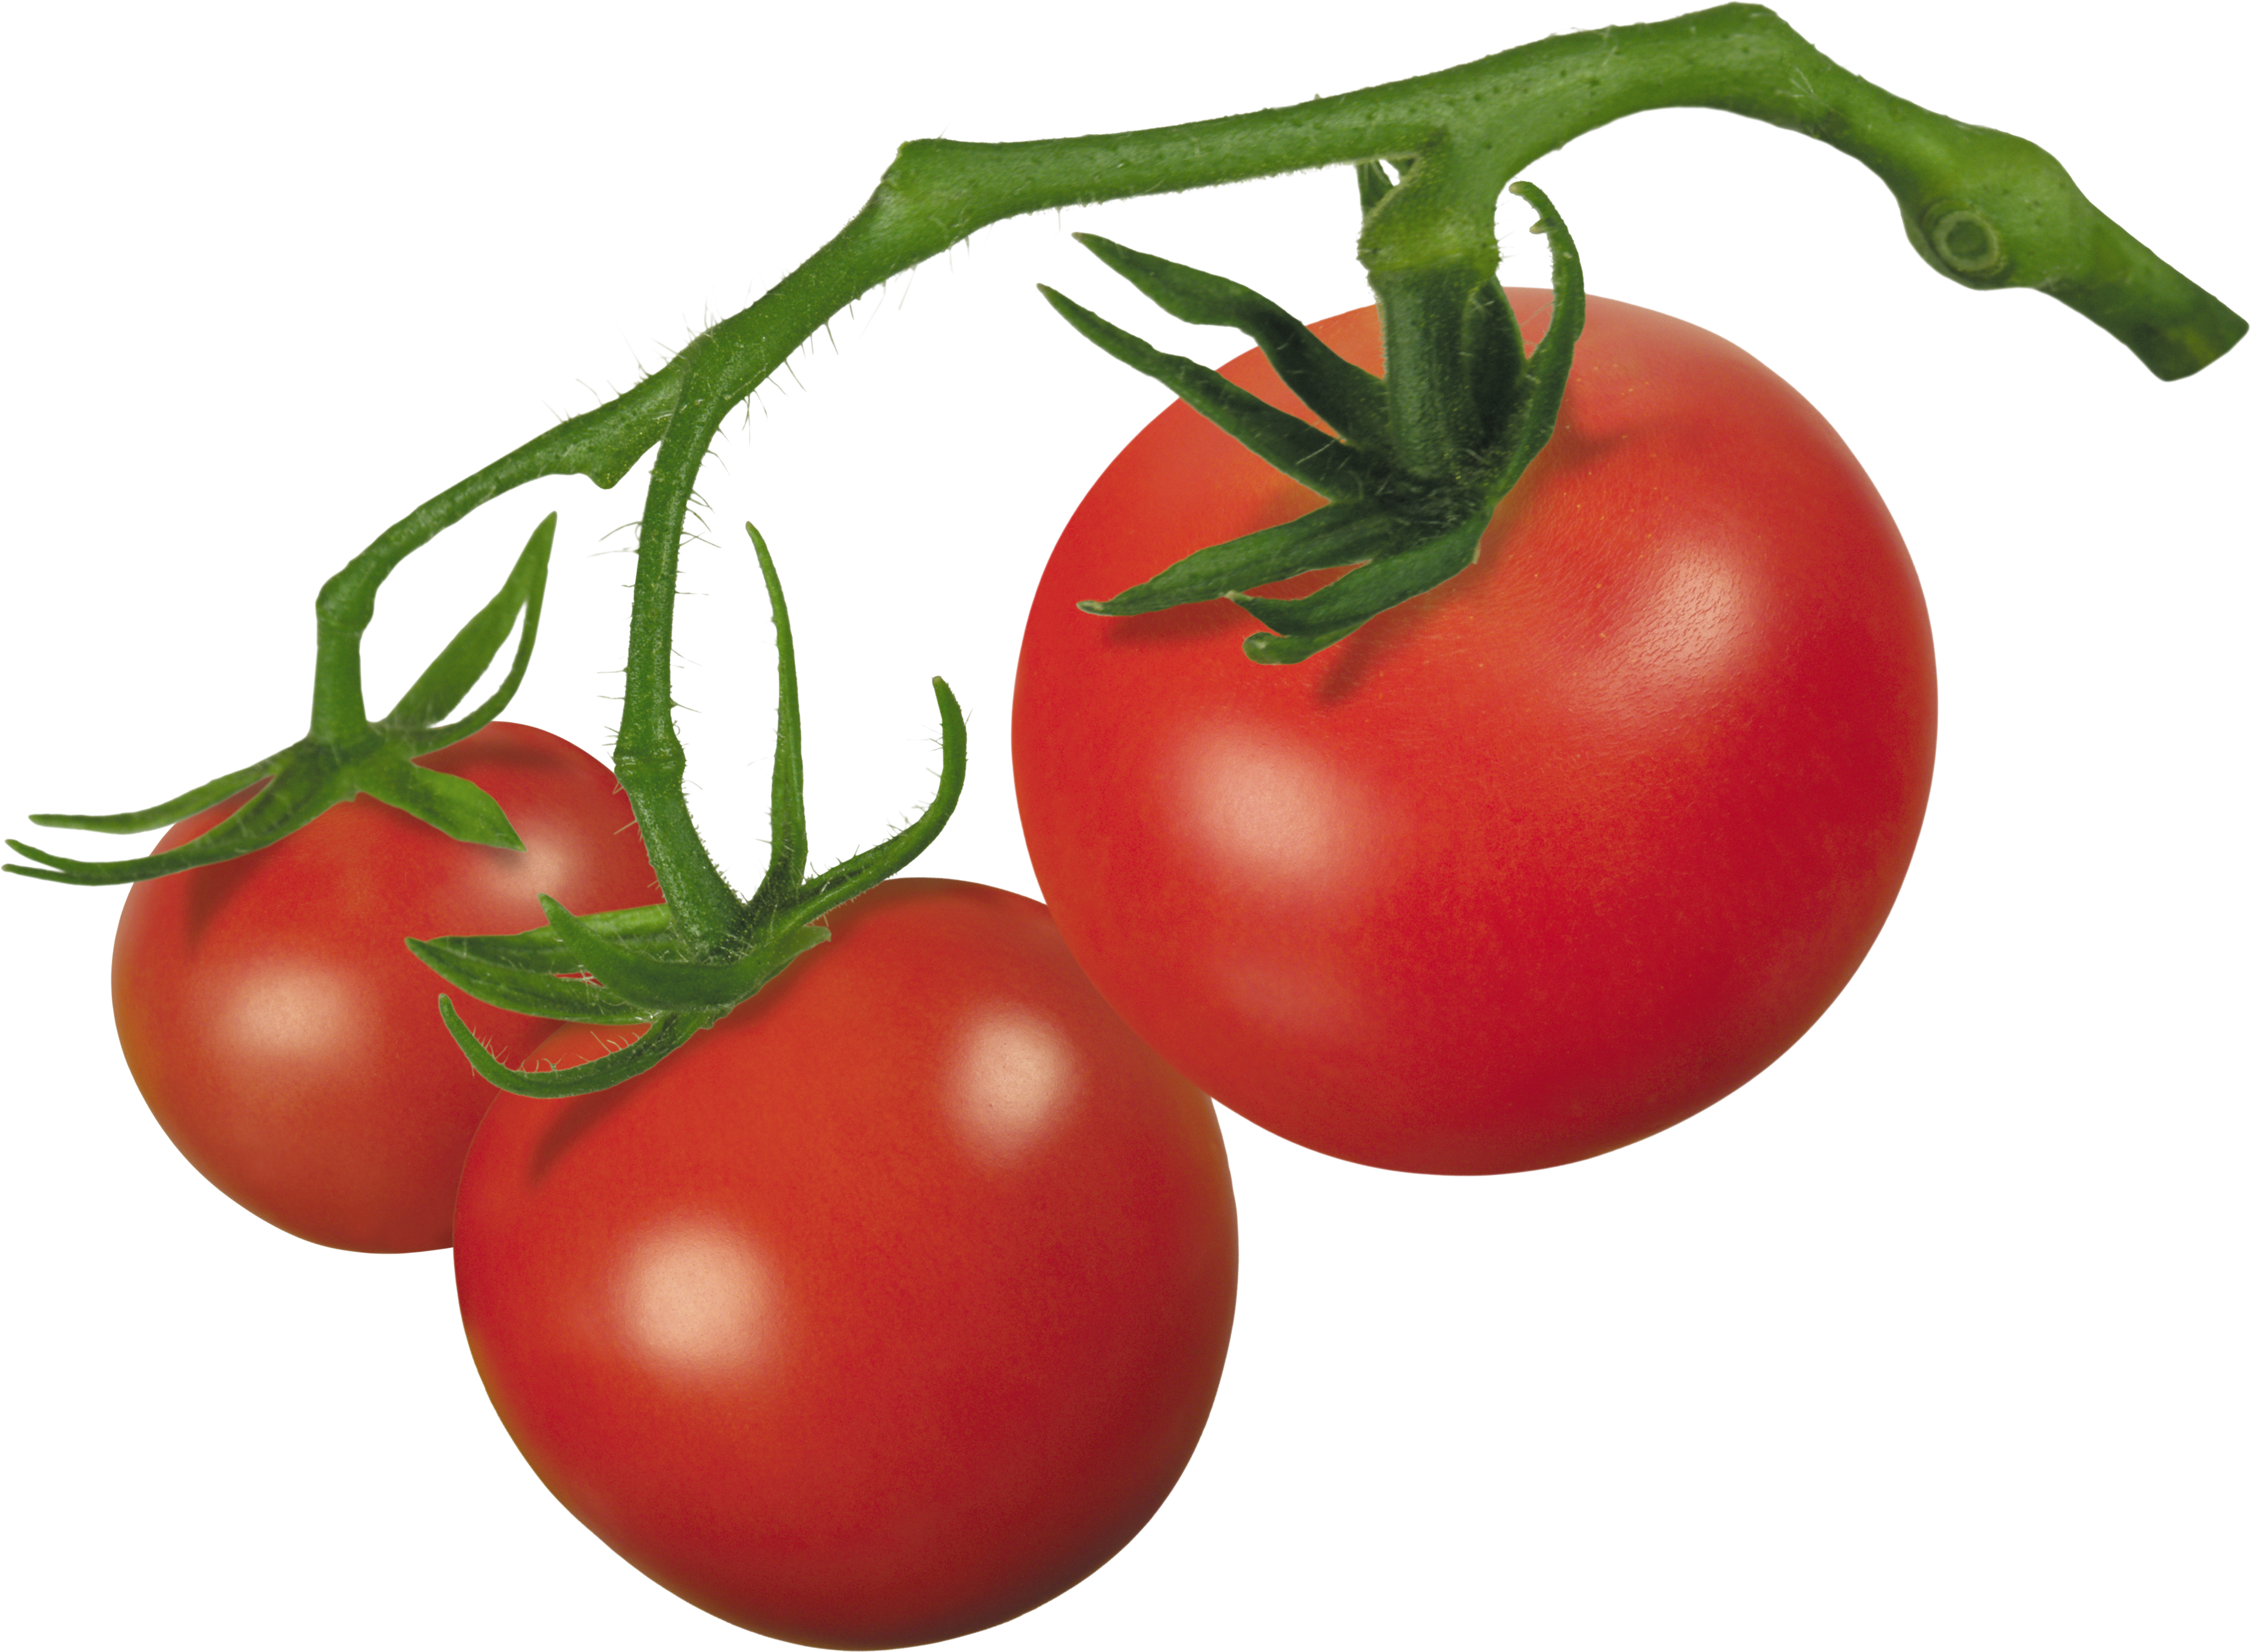 green tomato clipart - photo #49